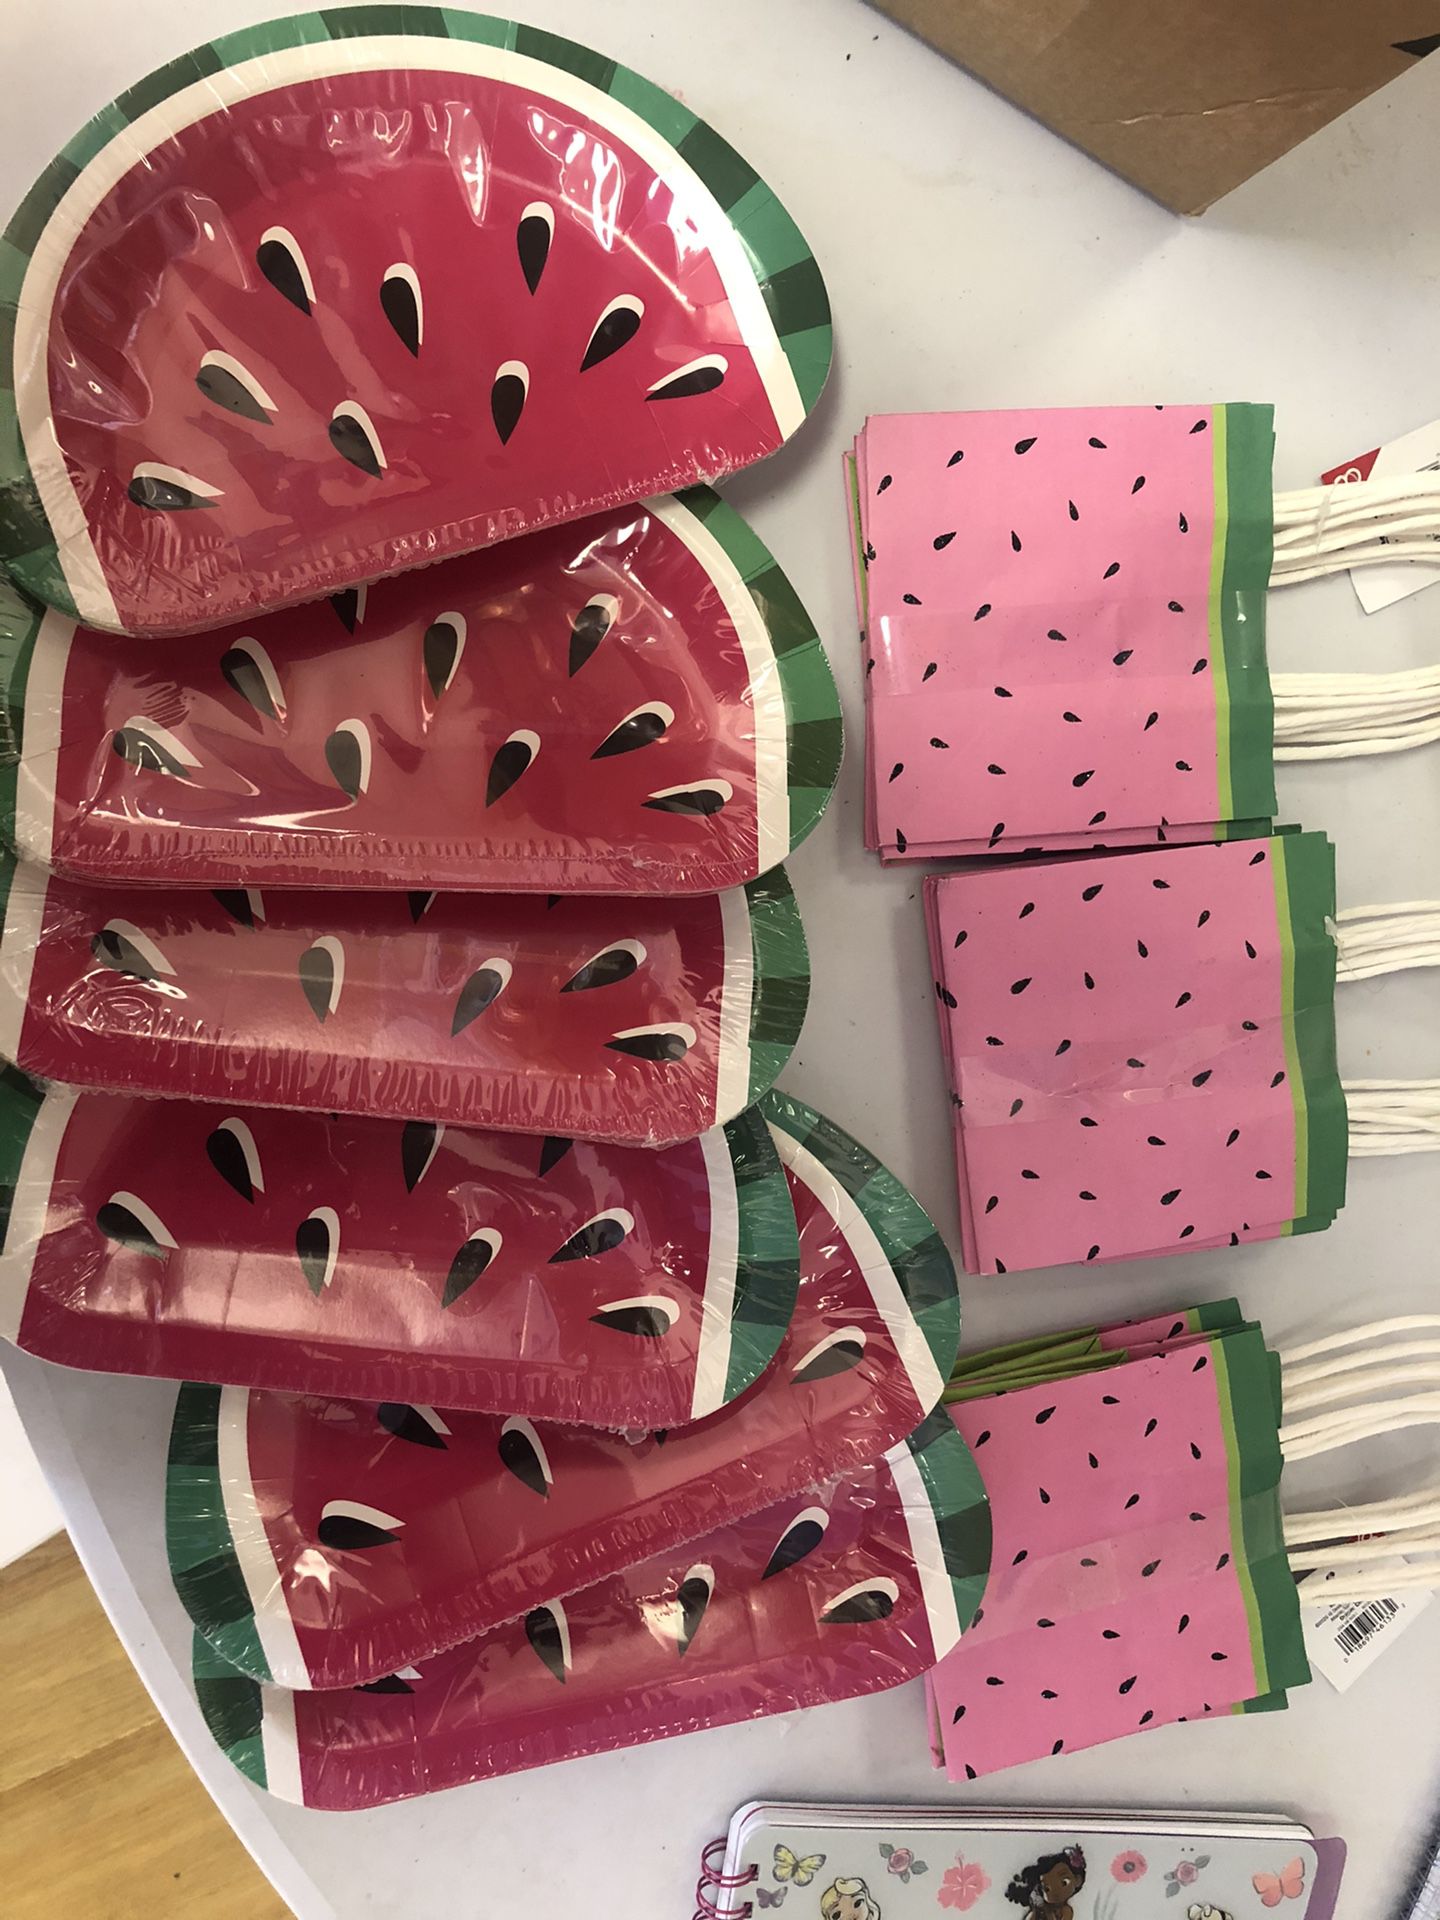 Watermelon Theme Party supplies